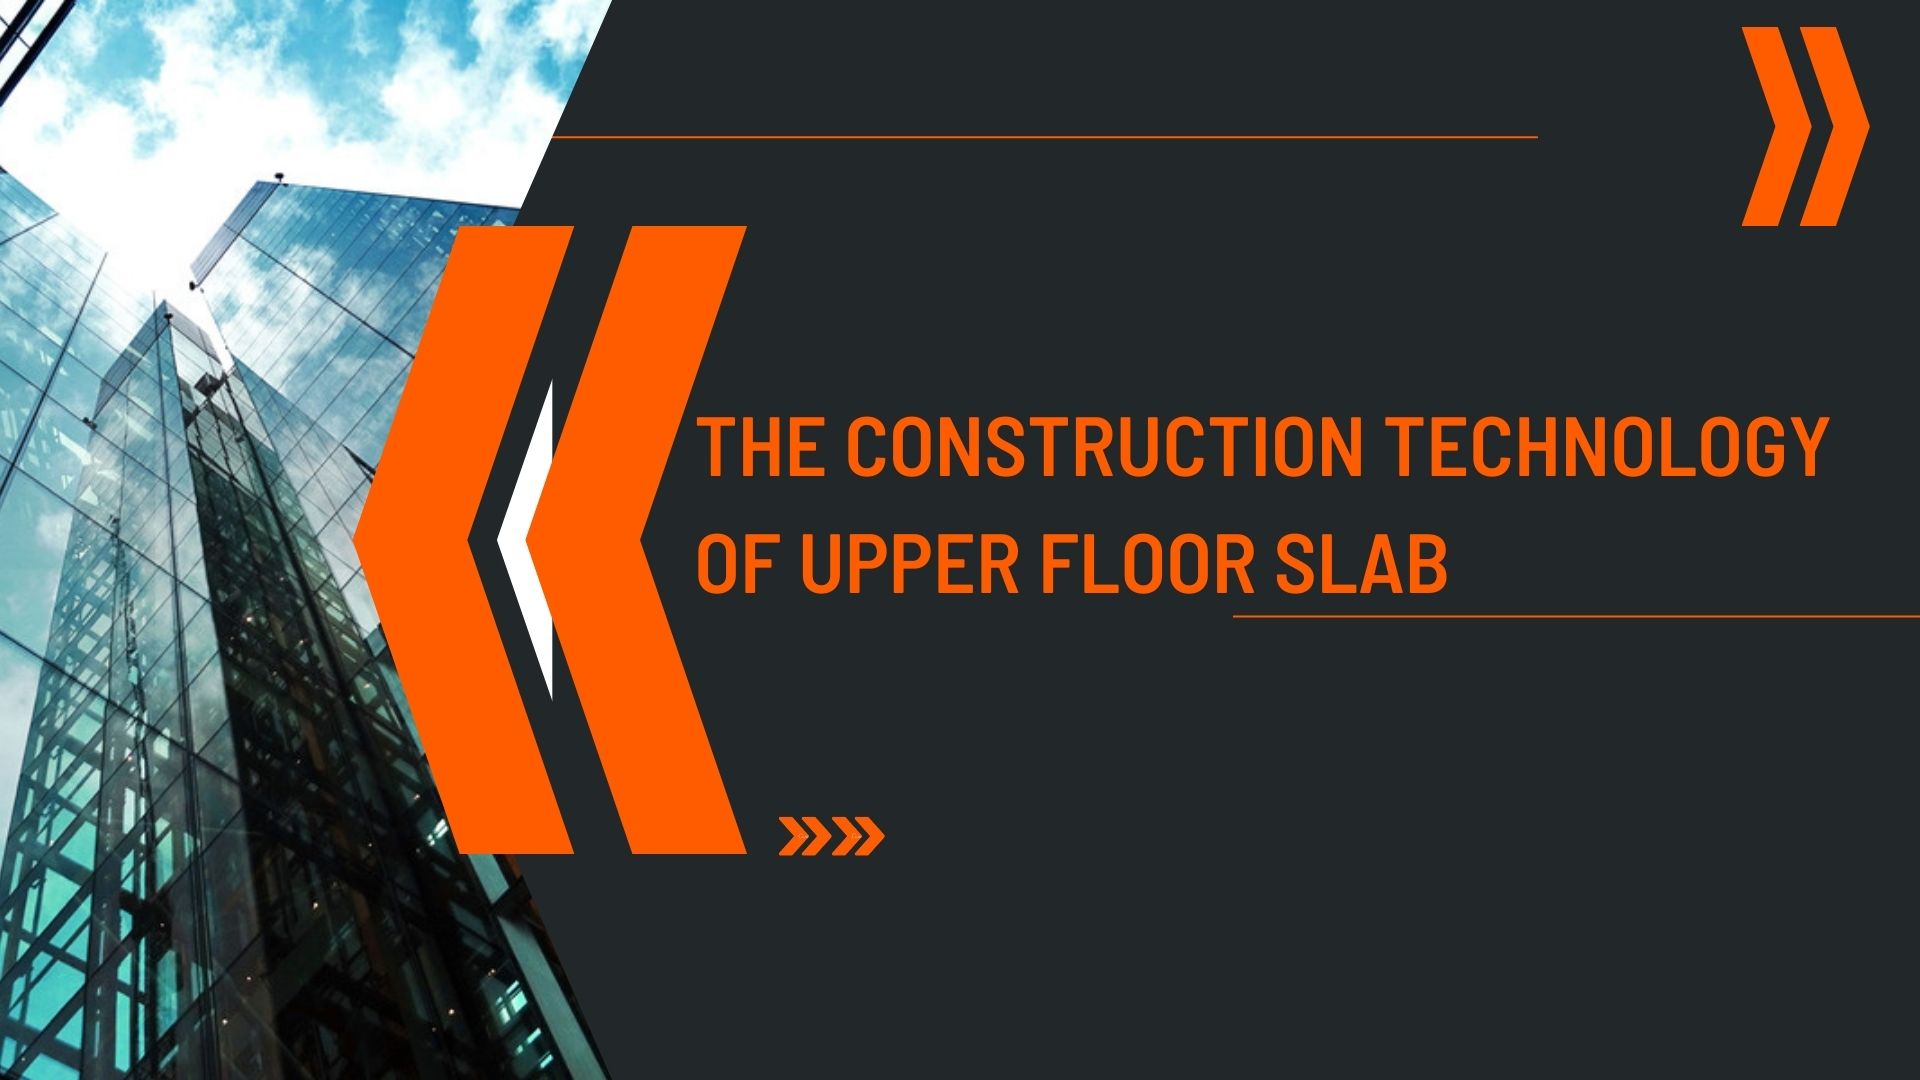 The Construction Technology of Upper Floor Slab